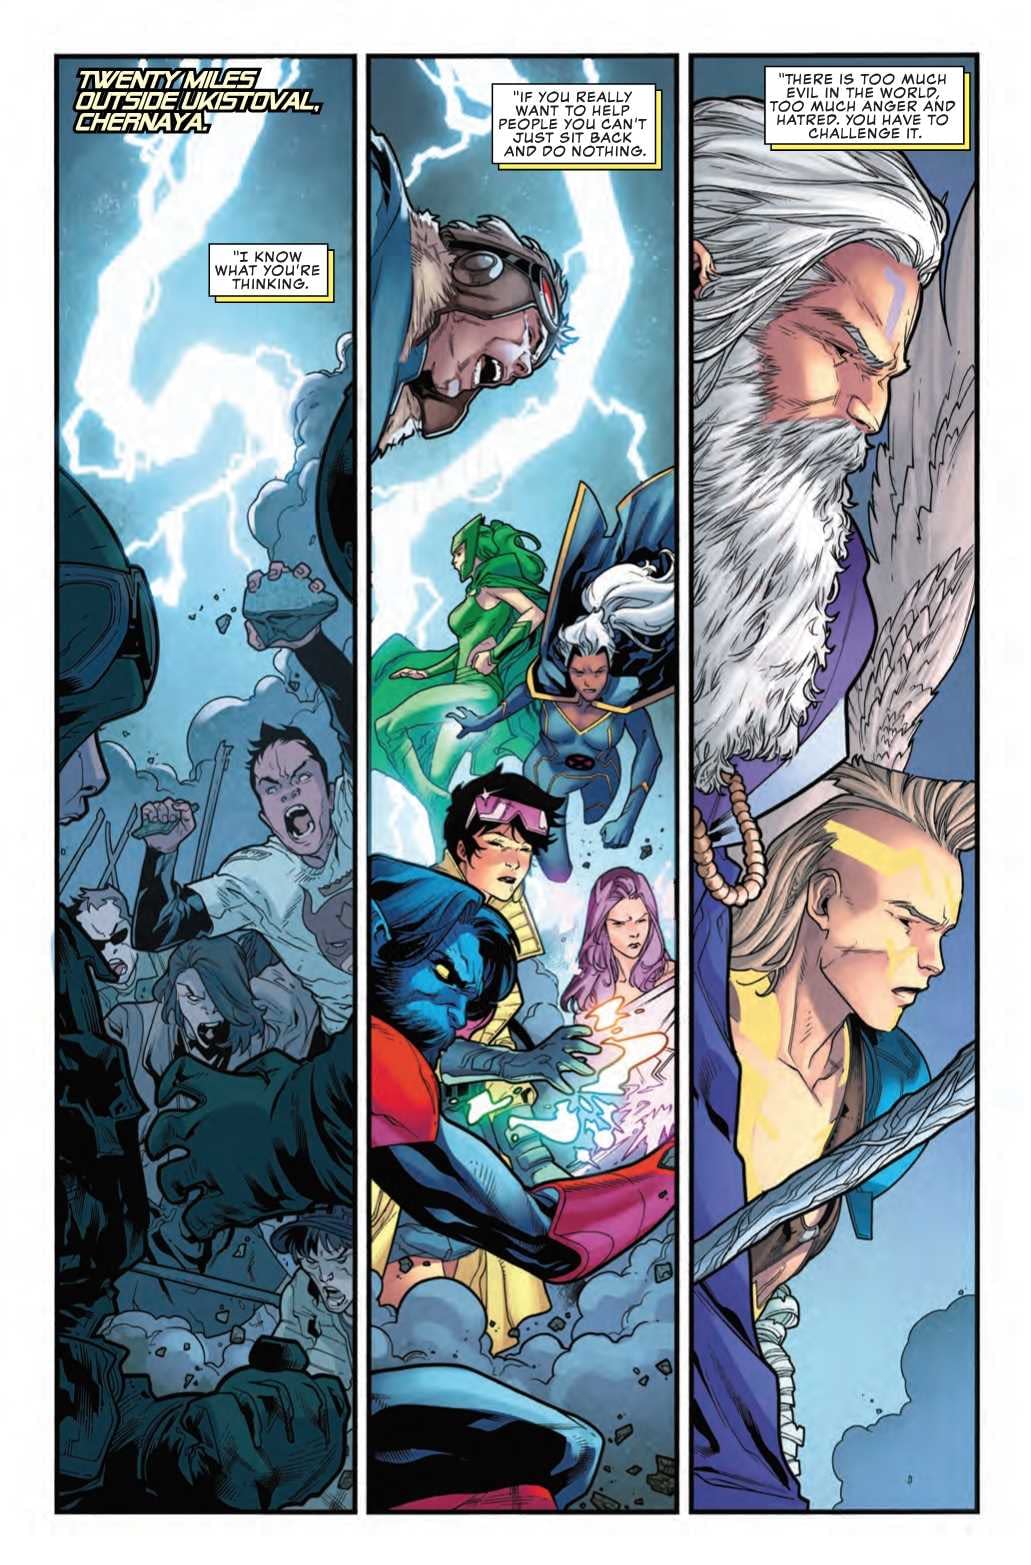 X-Man Argues for Civility in Politics in Next Week's Uncanny X-Men #5